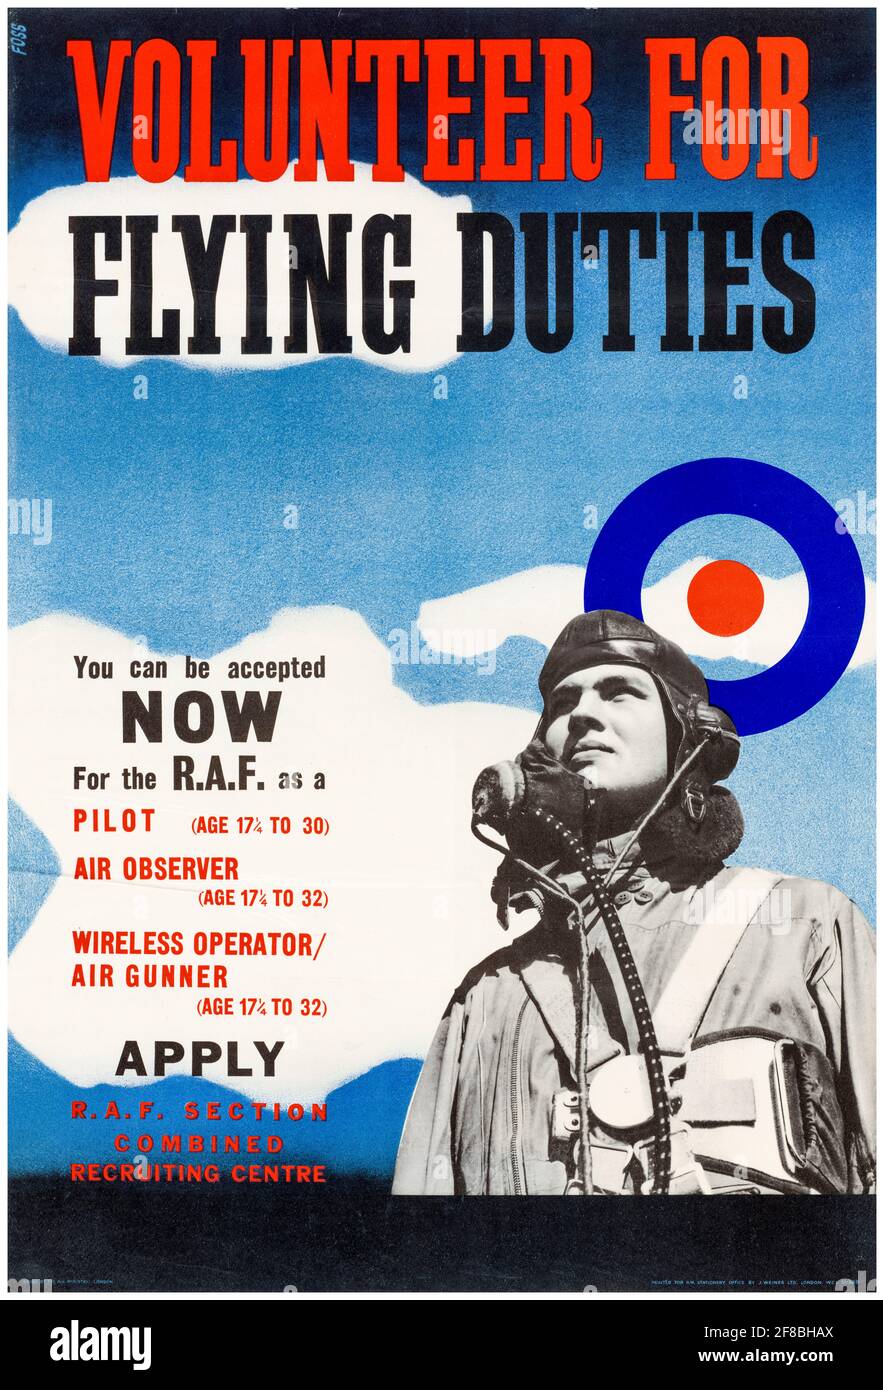 British, WW2, affiche de recrutement de la Royal Air Force (RAF), Volunteer for Flying Duties, 1942-1945 Banque D'Images